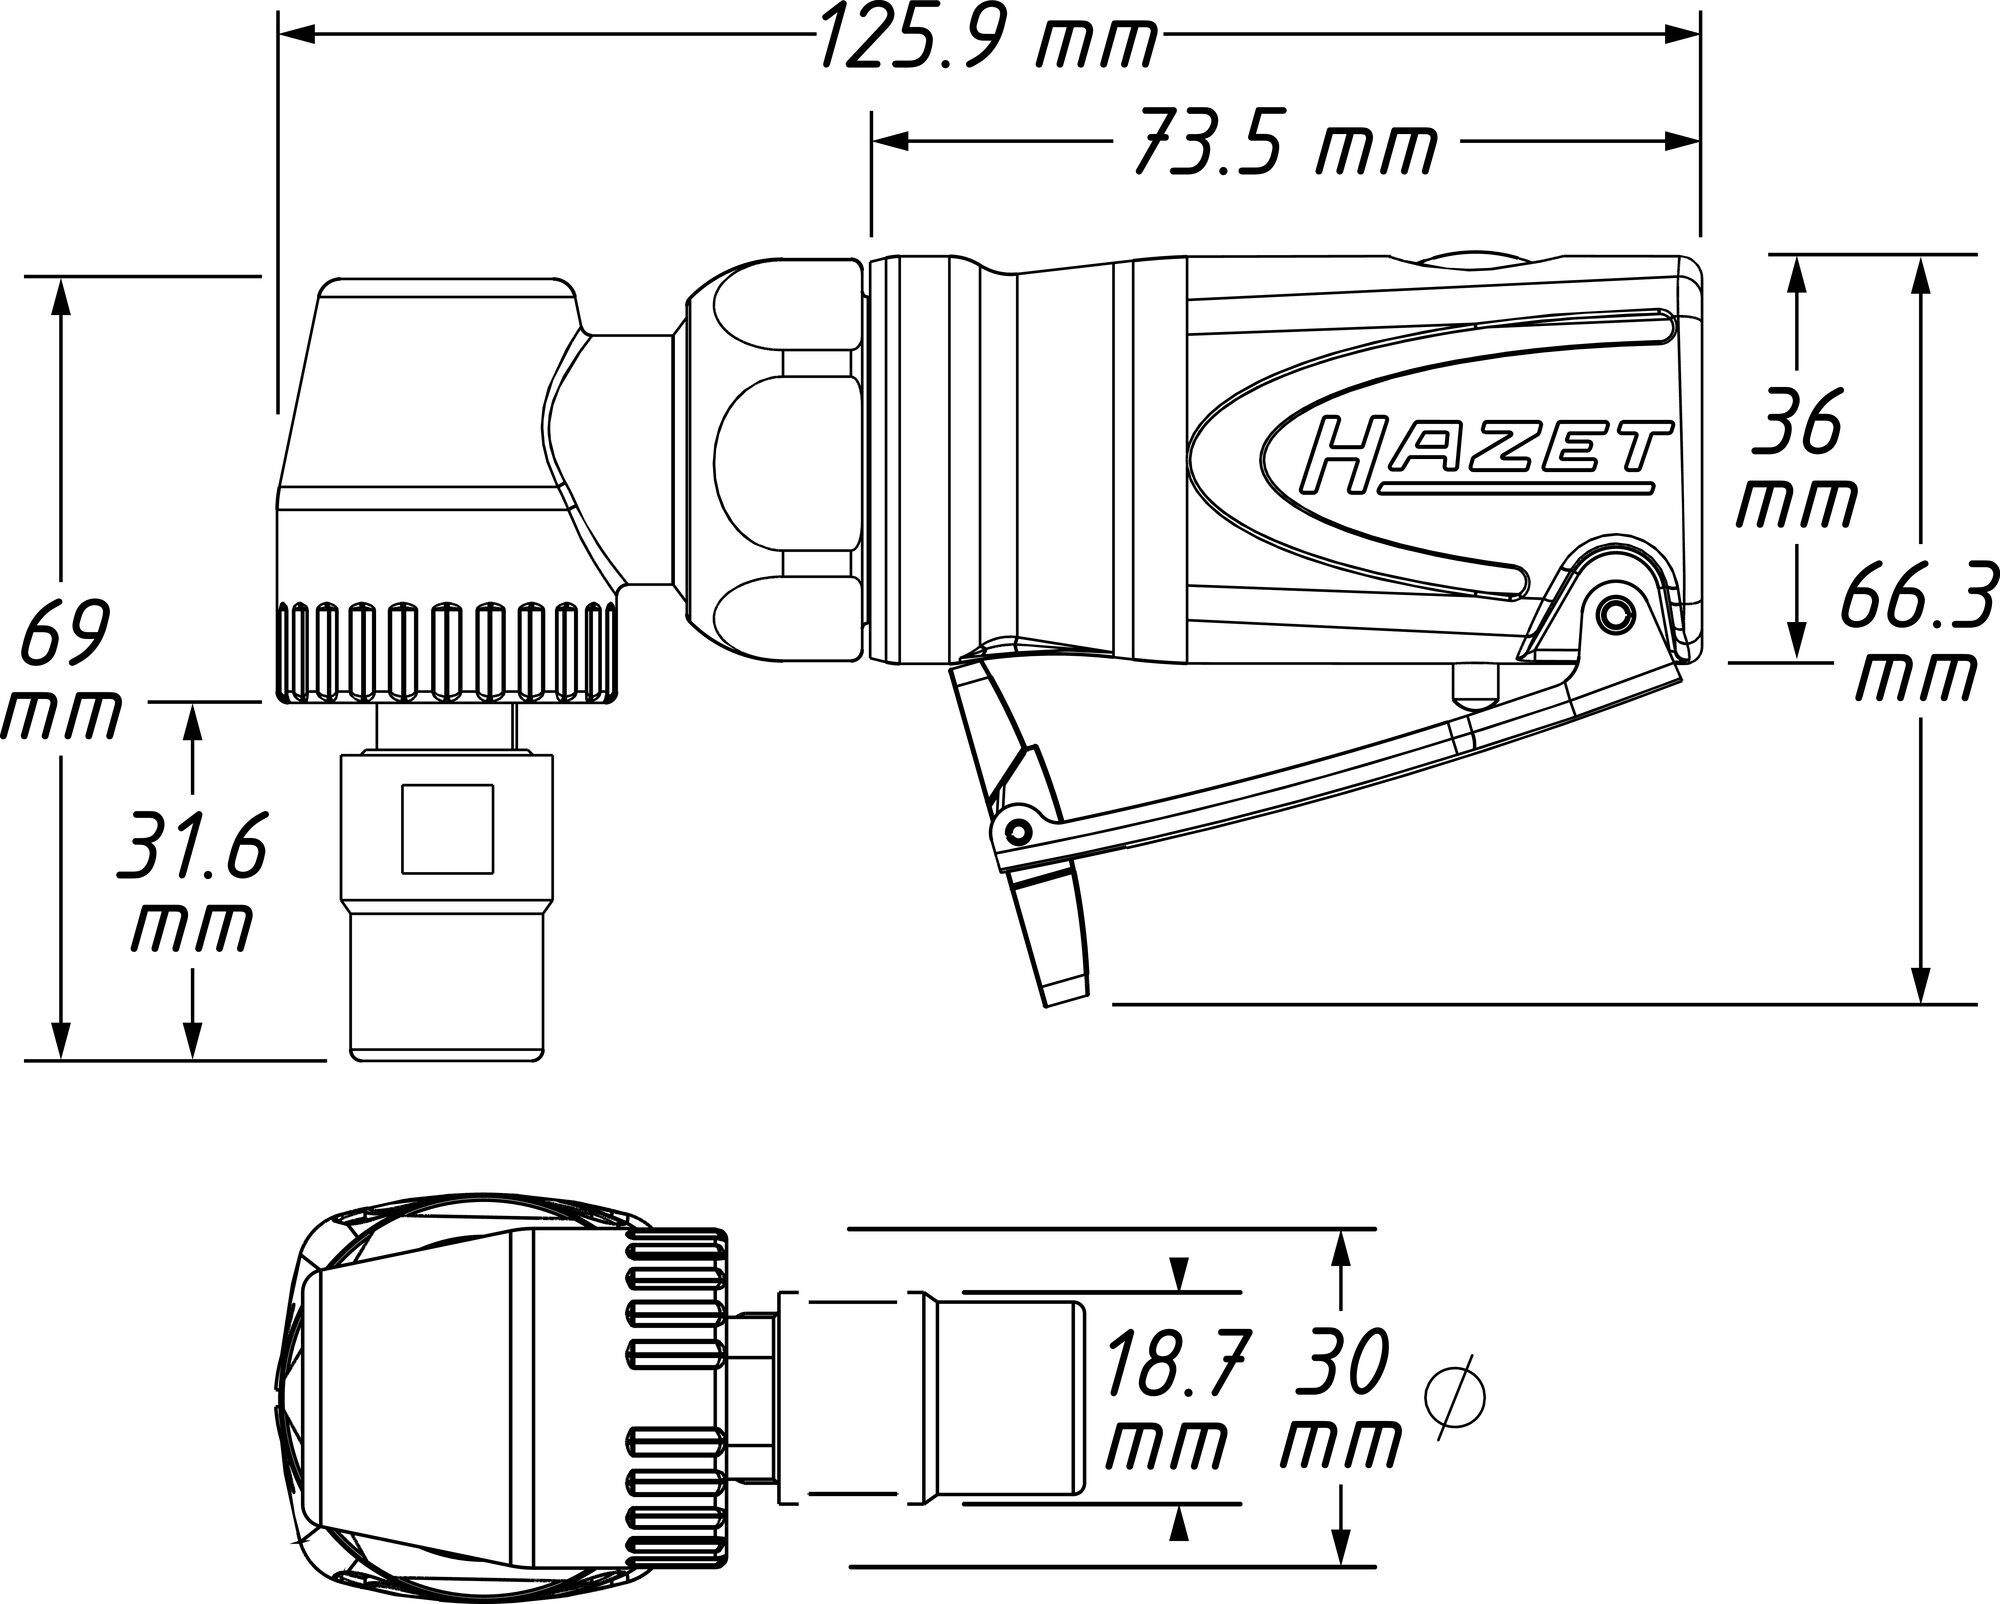 Mini-ponceuse pneumatique coudée disque 50 mm HAZET